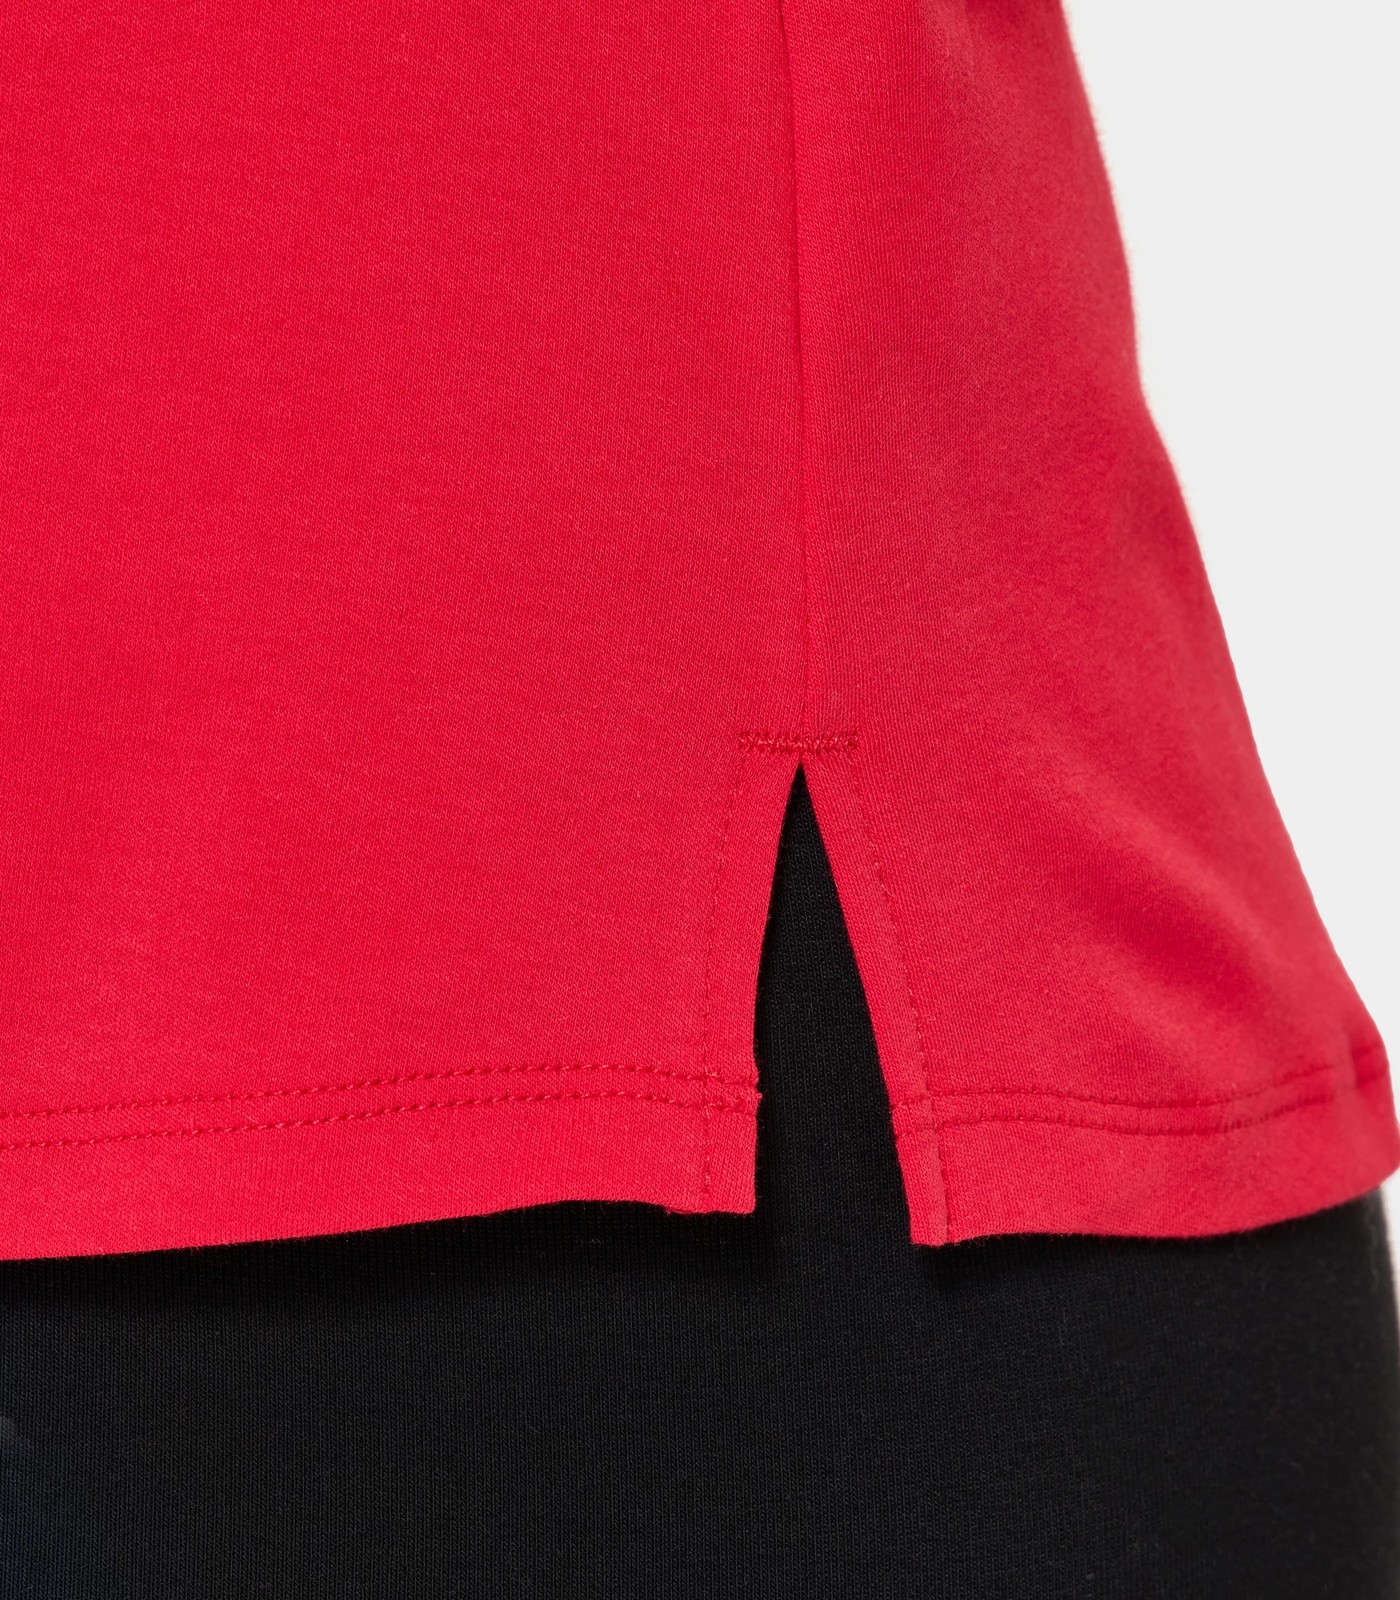 Alannah Core T-Shirt - Fila - Tango Red | Target Australia